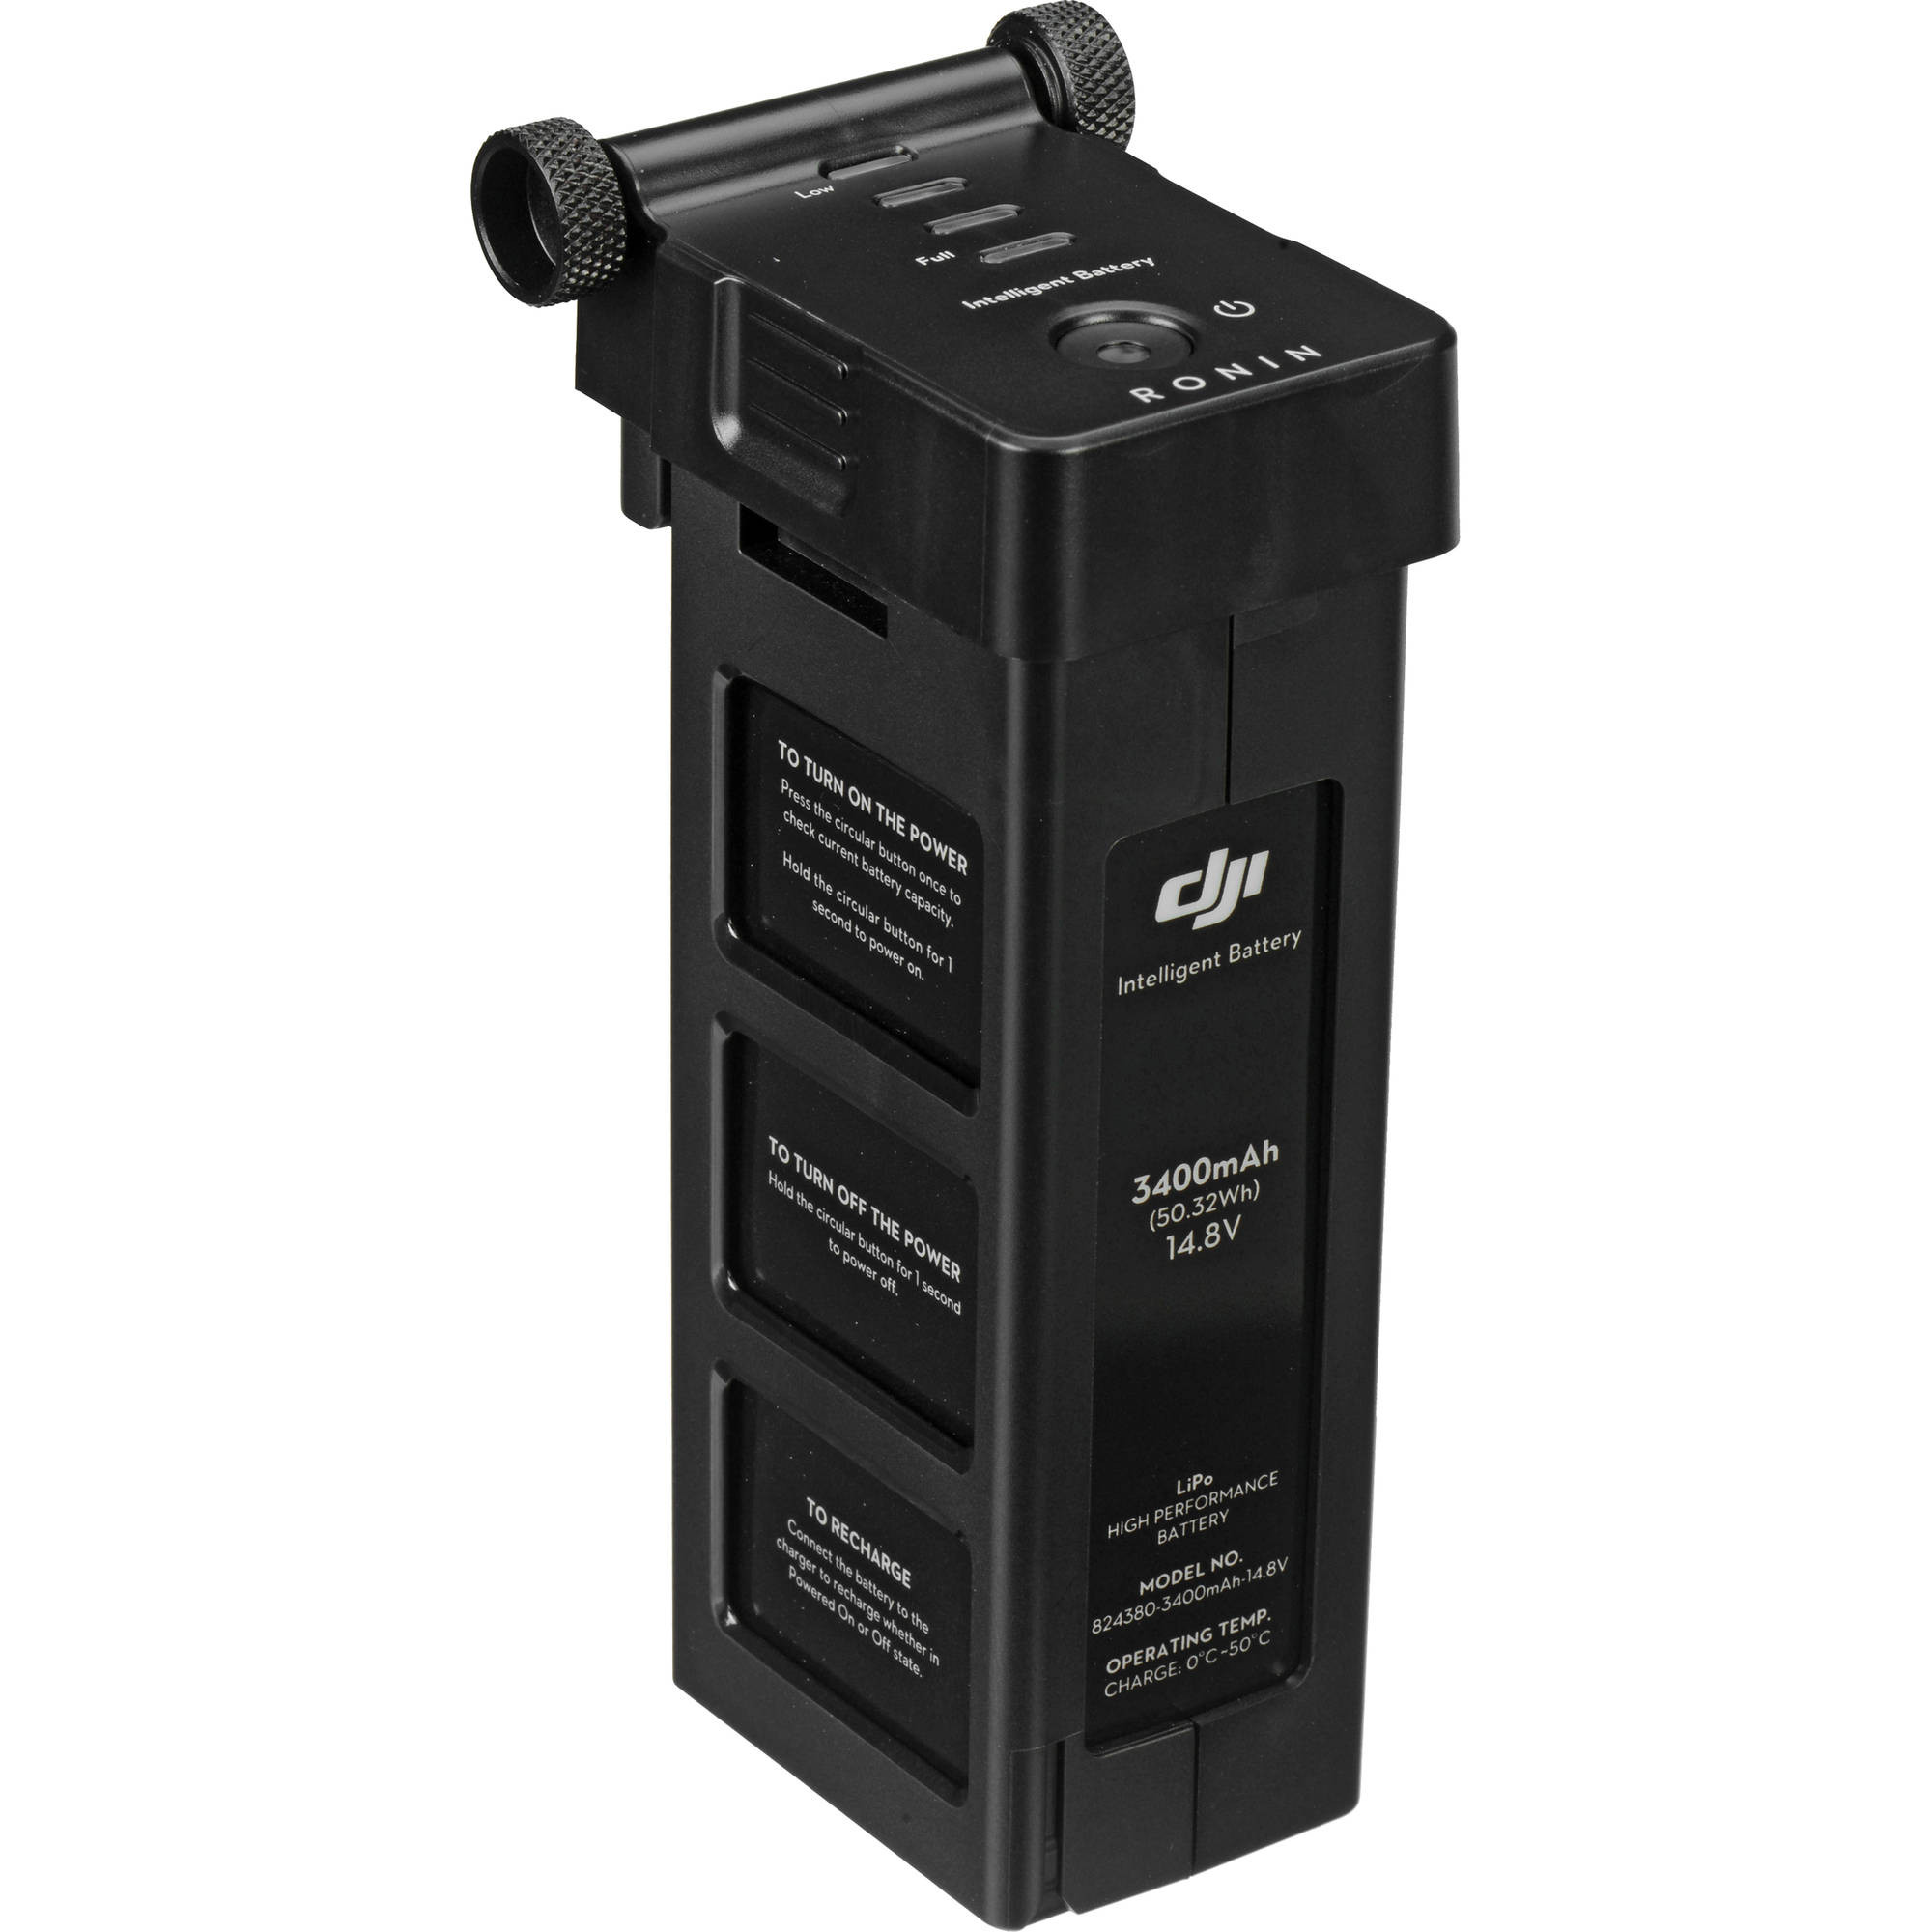 Battery m. Аккумулятор для DJI Ronin. DJI Ronin m аккумулятор. Аккумулятор 1580mah для DJI Ronin-m. DJI Ronin MX аккумулятор.